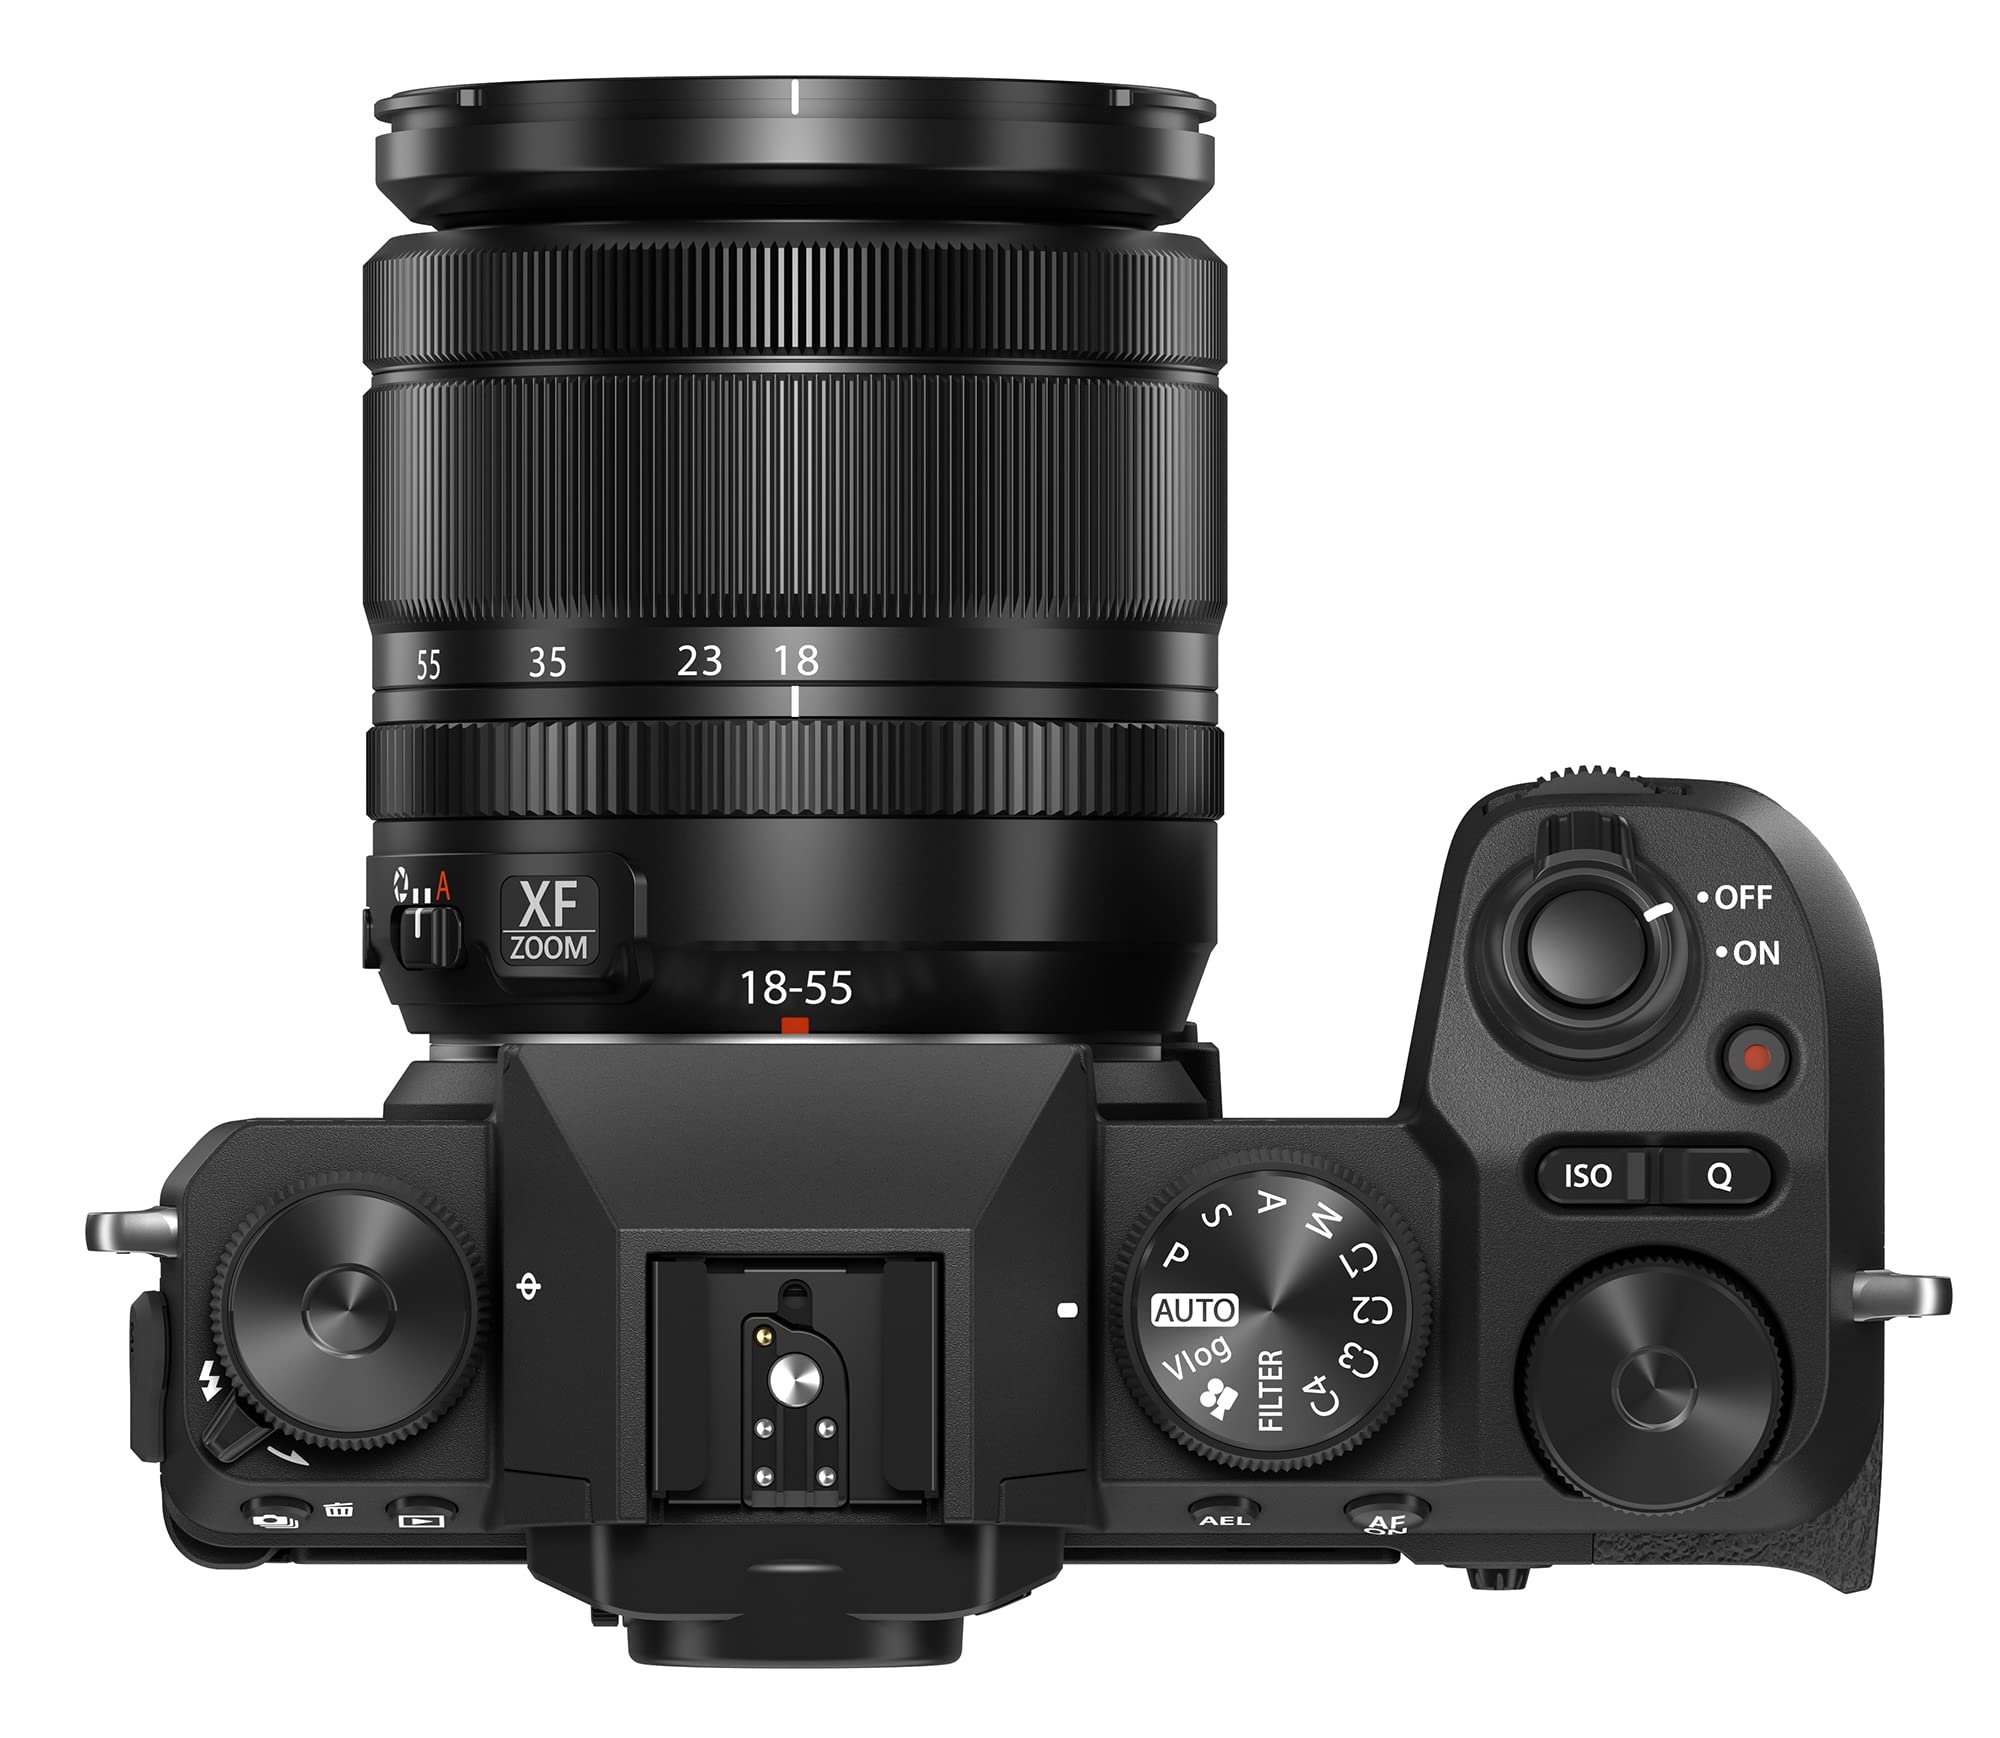 Fujifilm X-S20 Mirrorless Digital Camera XF18-55mm Lens Kit Black